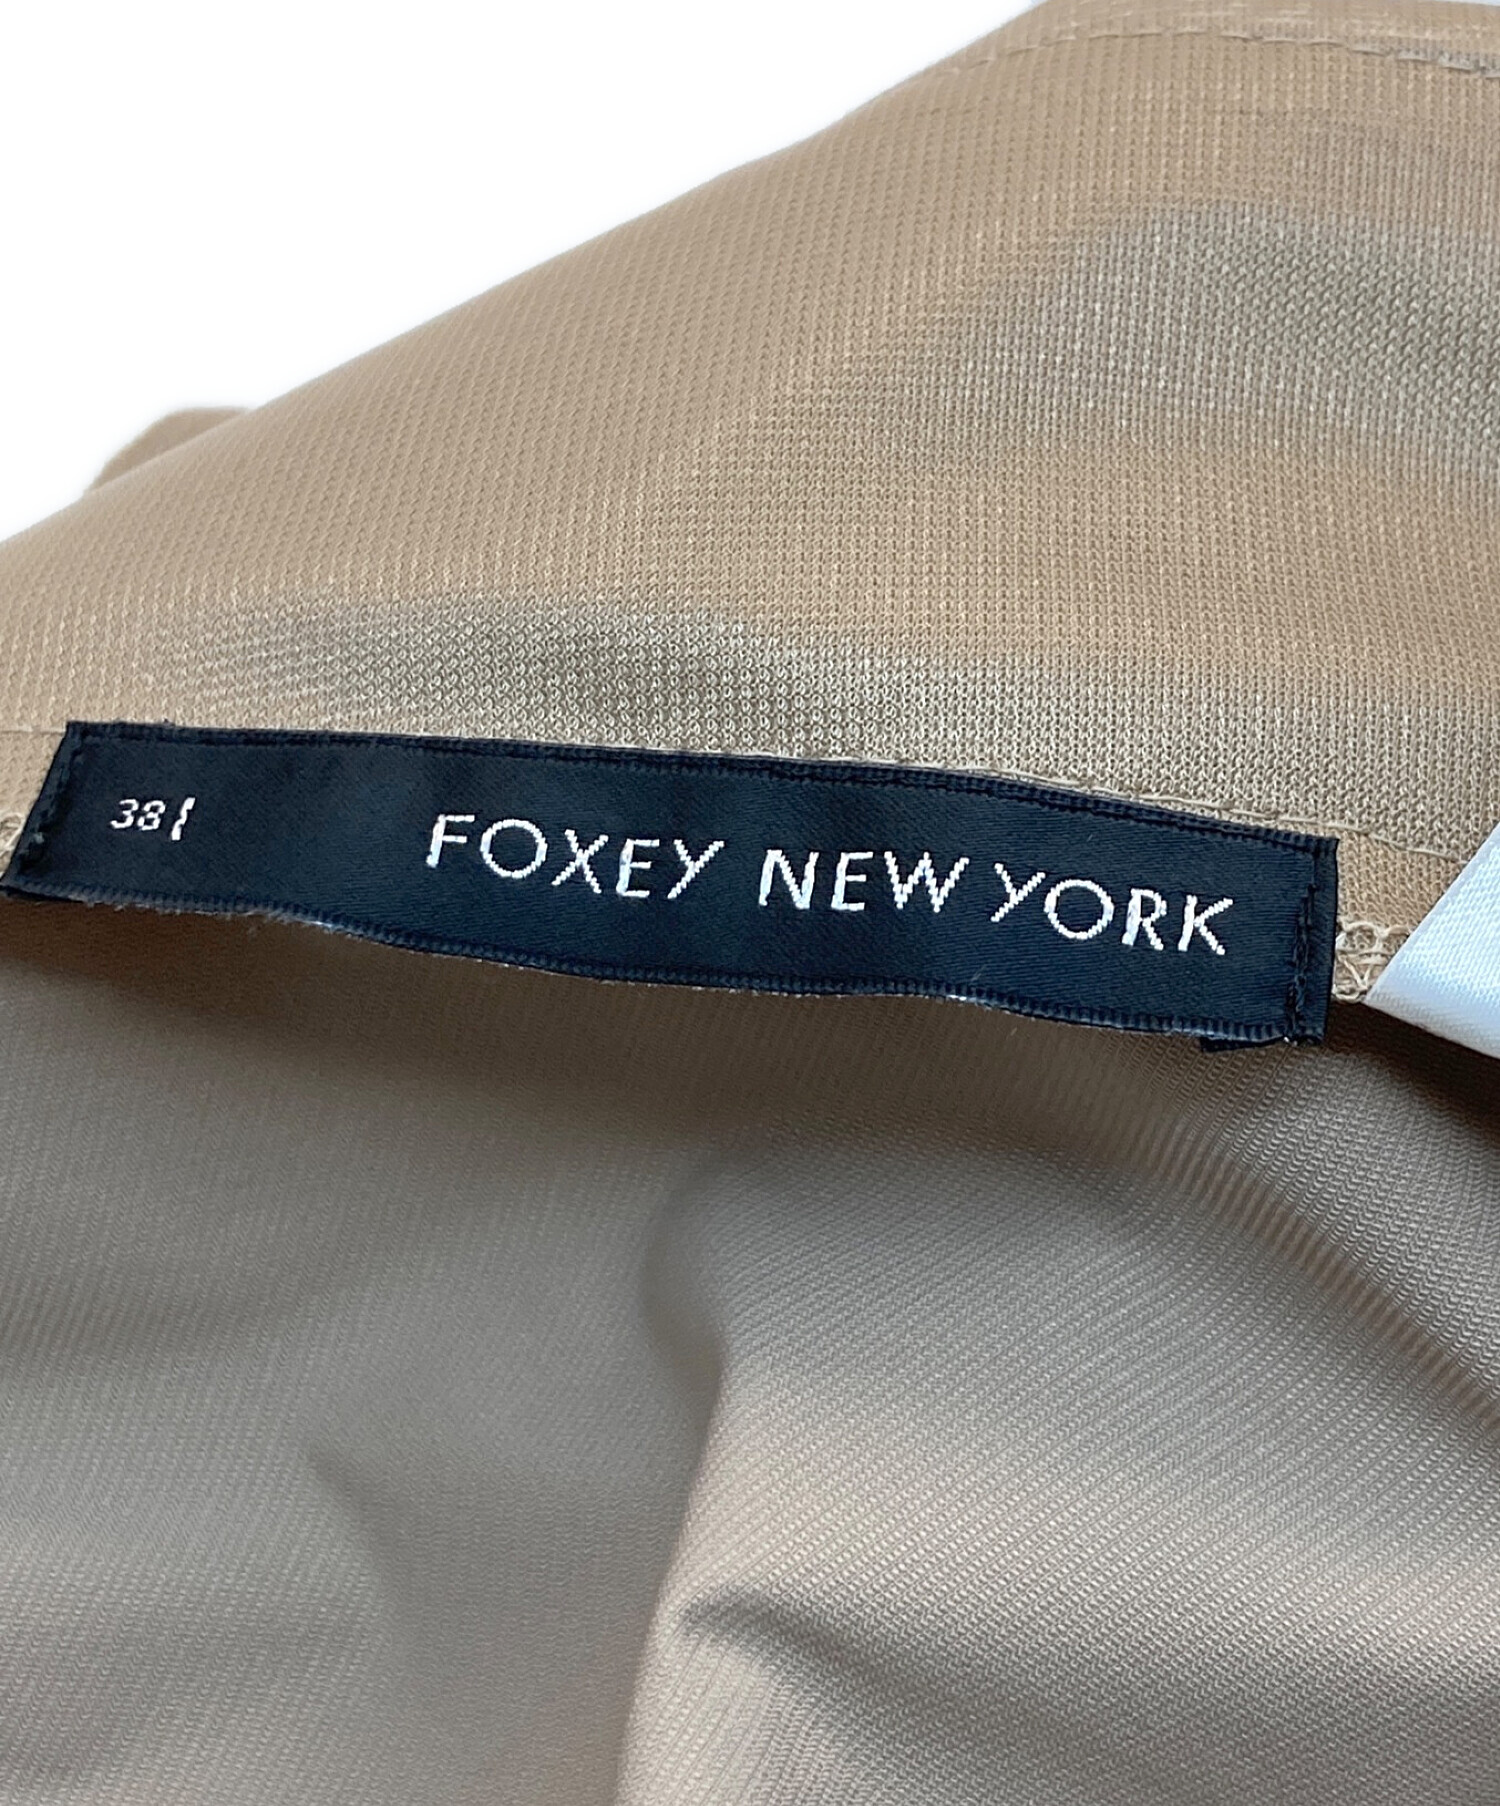 FOXEY NEWYORK (フォクシーニューヨーク) デザインワンピース ベージュ サイズ:38